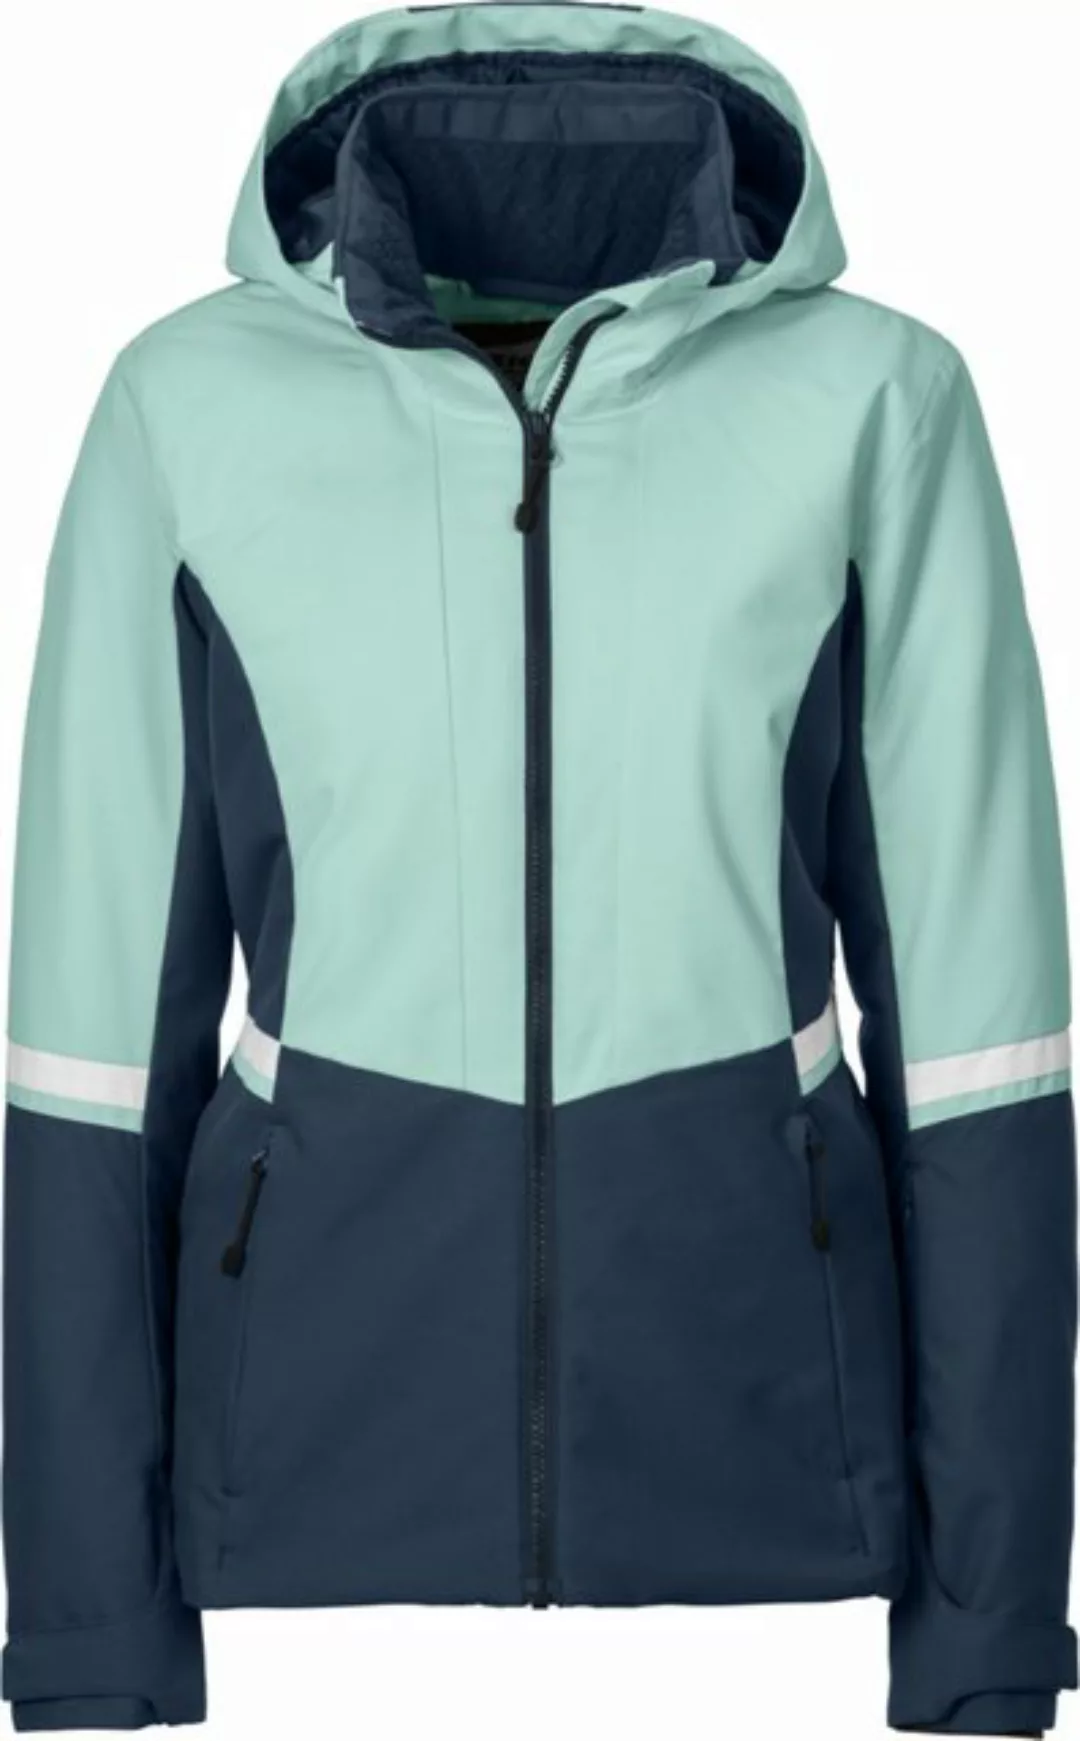 Ziener Winterjacke PANKA lady (jacket ski) HALE NAVY günstig online kaufen